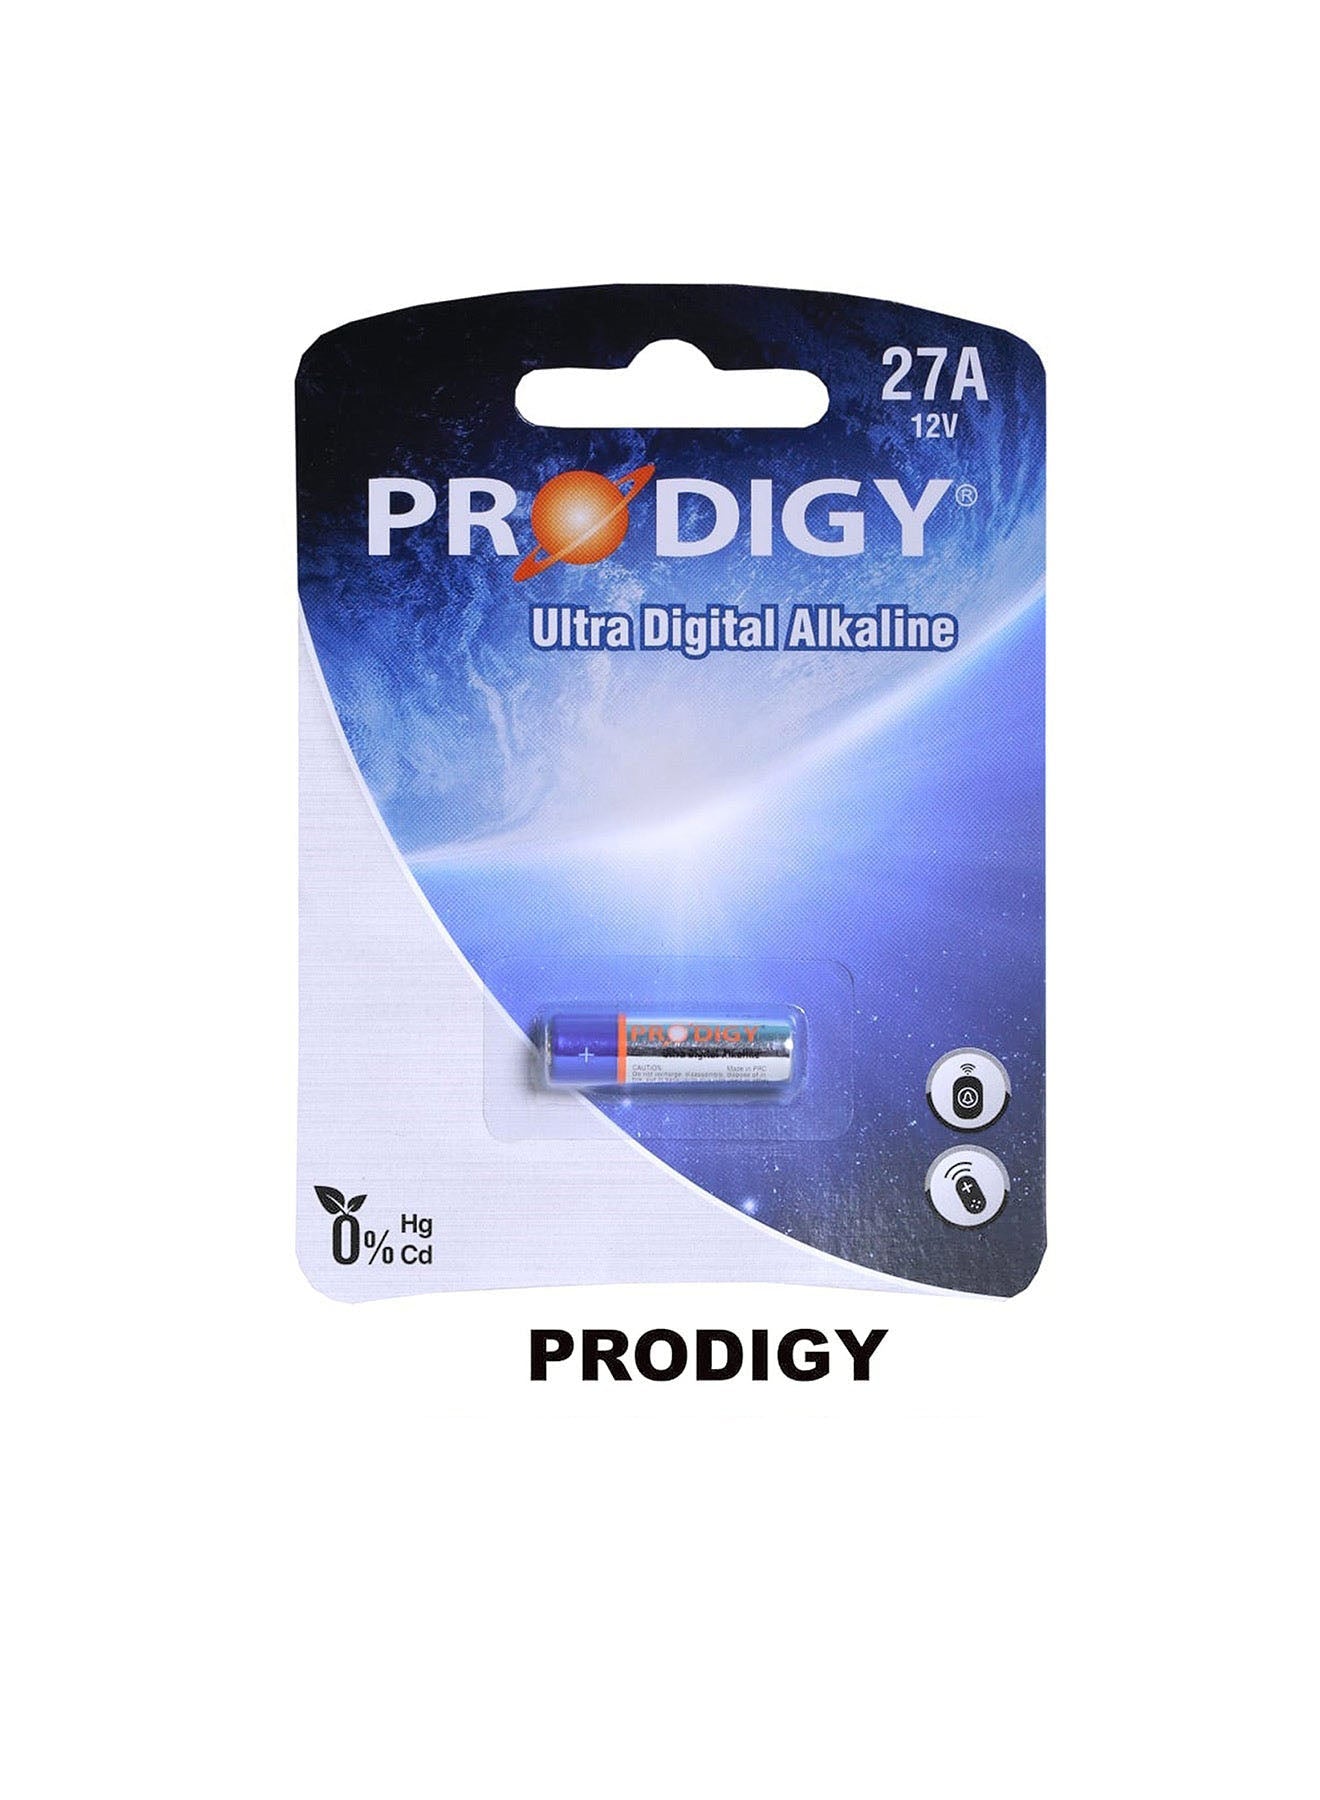 Prodigy Alkaline 27A 12V Value Pack of 2 